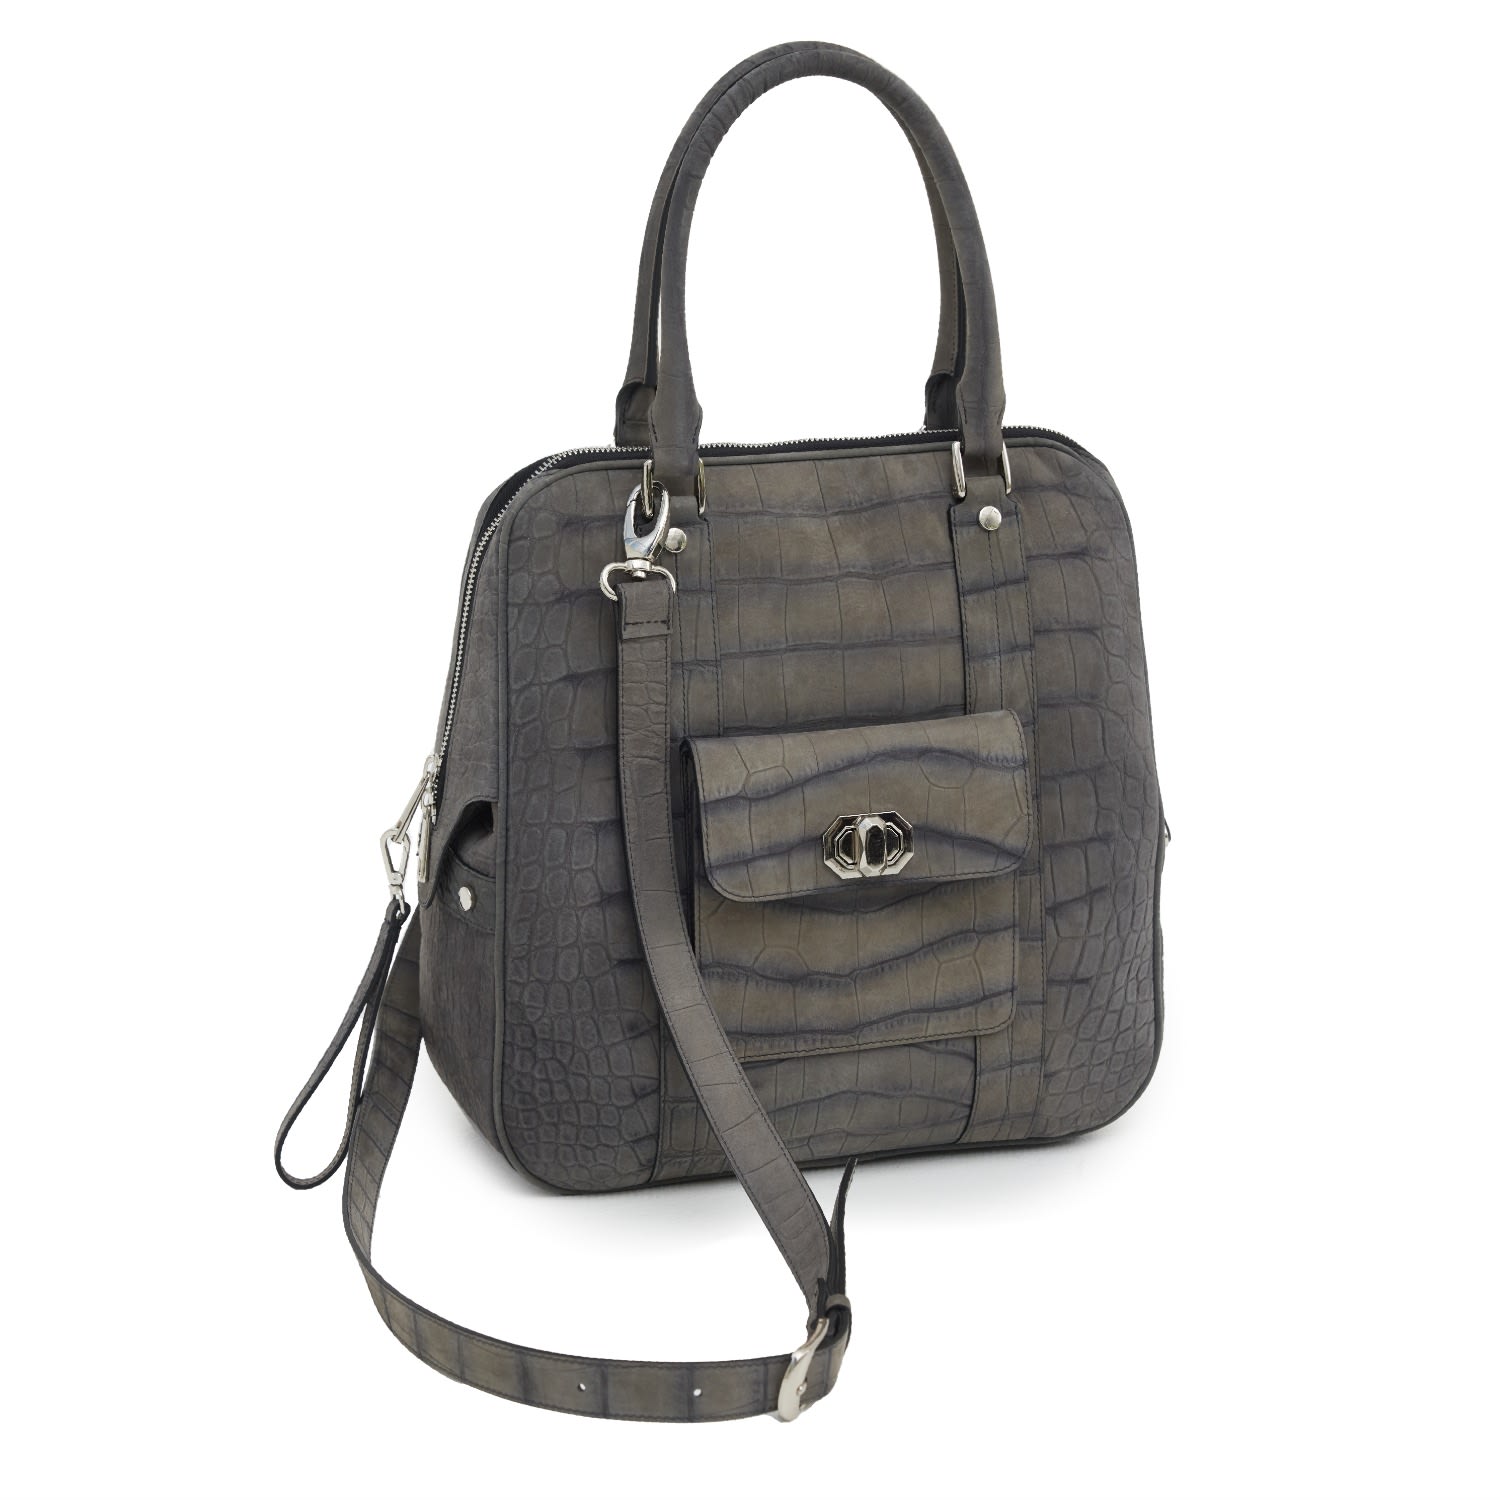 Women’s Croco Texture Leather Tote Handbag Grey Medium One Size Julia Allert